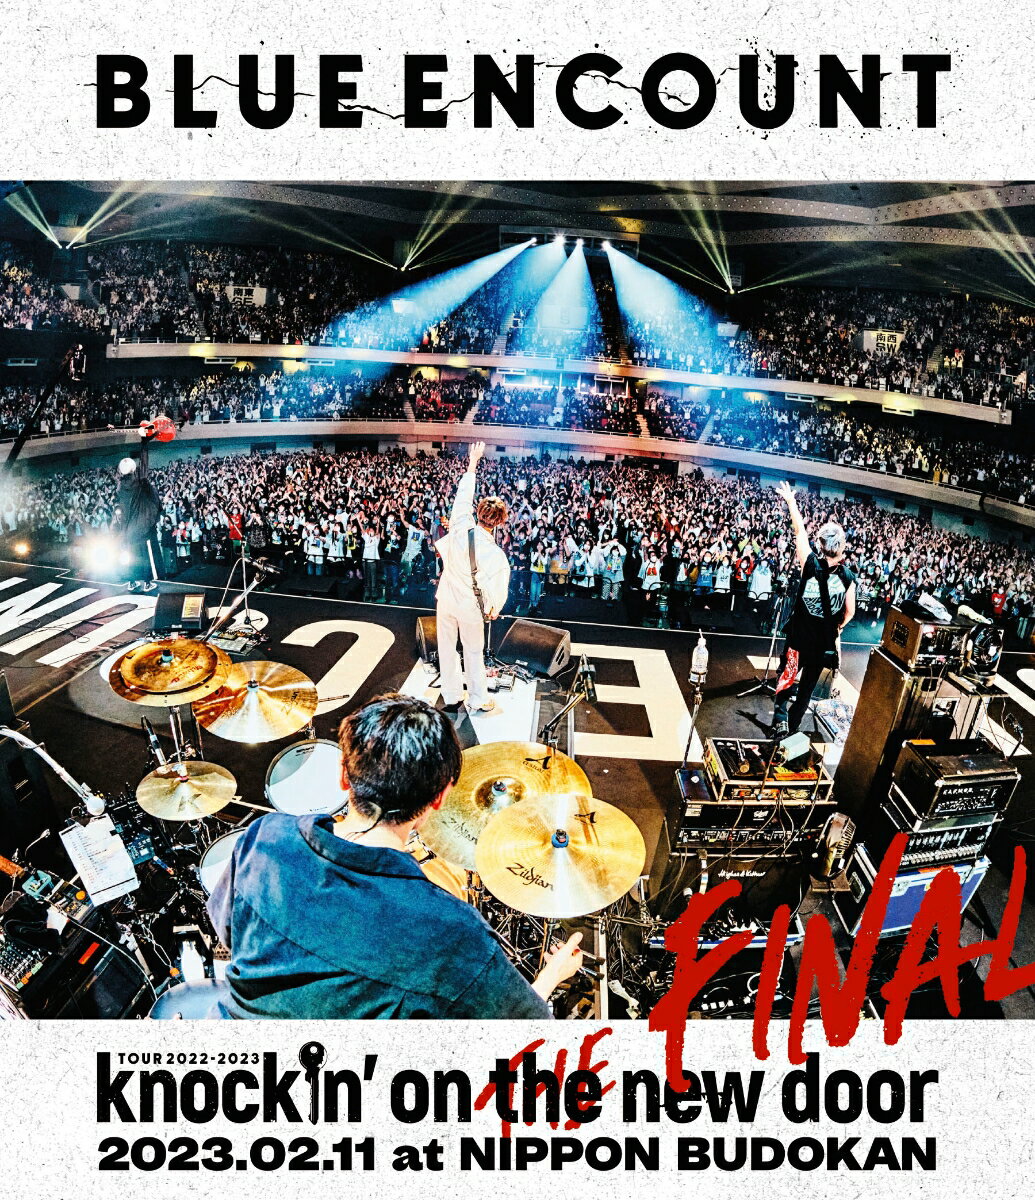 「BLUE ENCOUNT TOUR 2022-2023 〜knockin' on the new door〜THE FINAL」2023.02.11 at NIPPON BUDOKAN(Blu-ray通常盤)【Blu-ray】